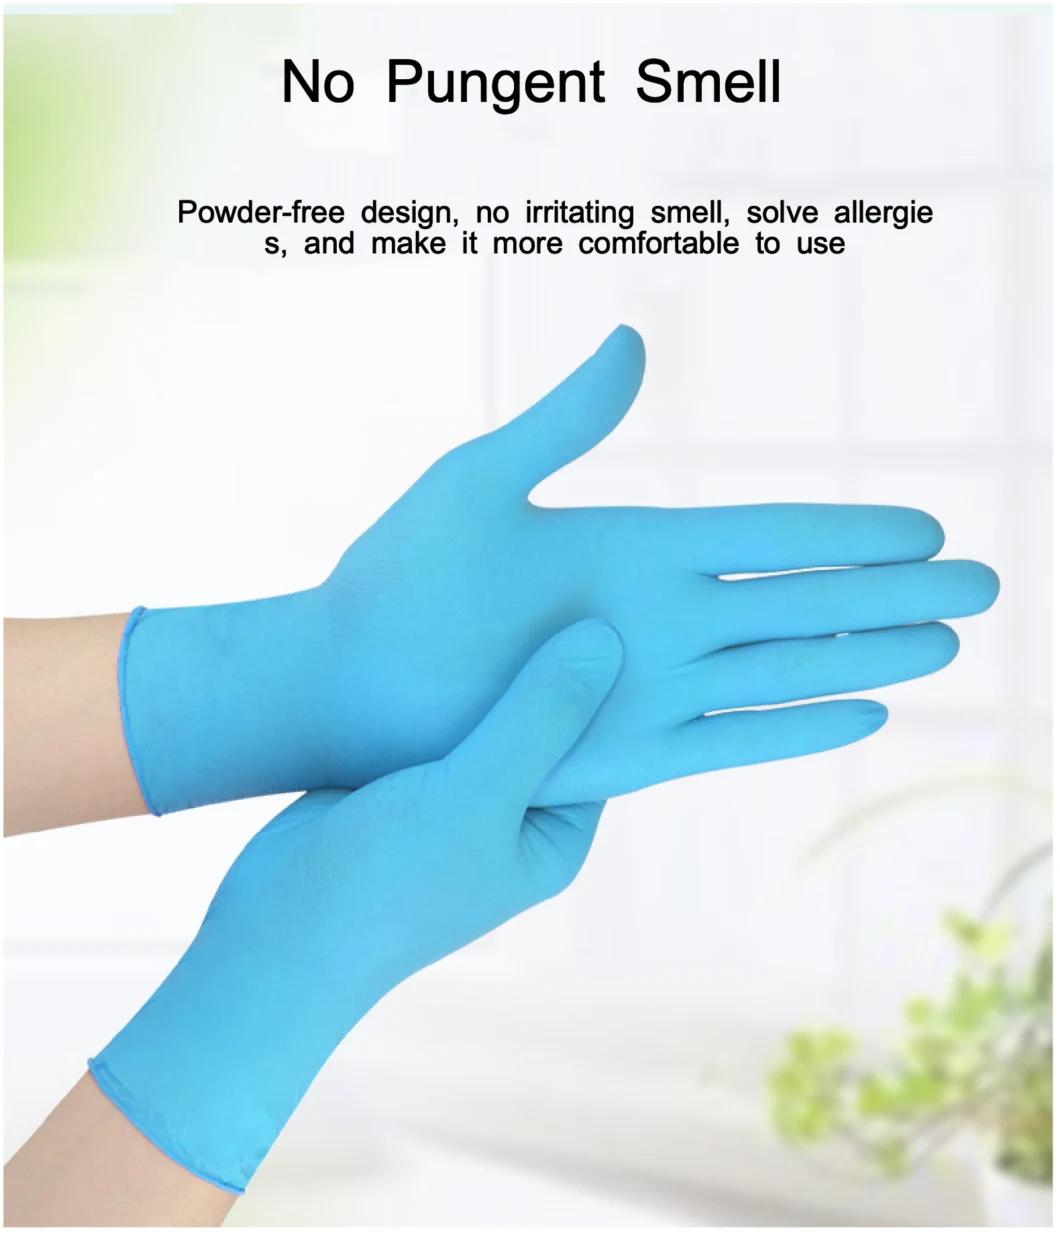 Multicolor 510K En455 Disposable Nitrile Examination Gloves of Powder Free